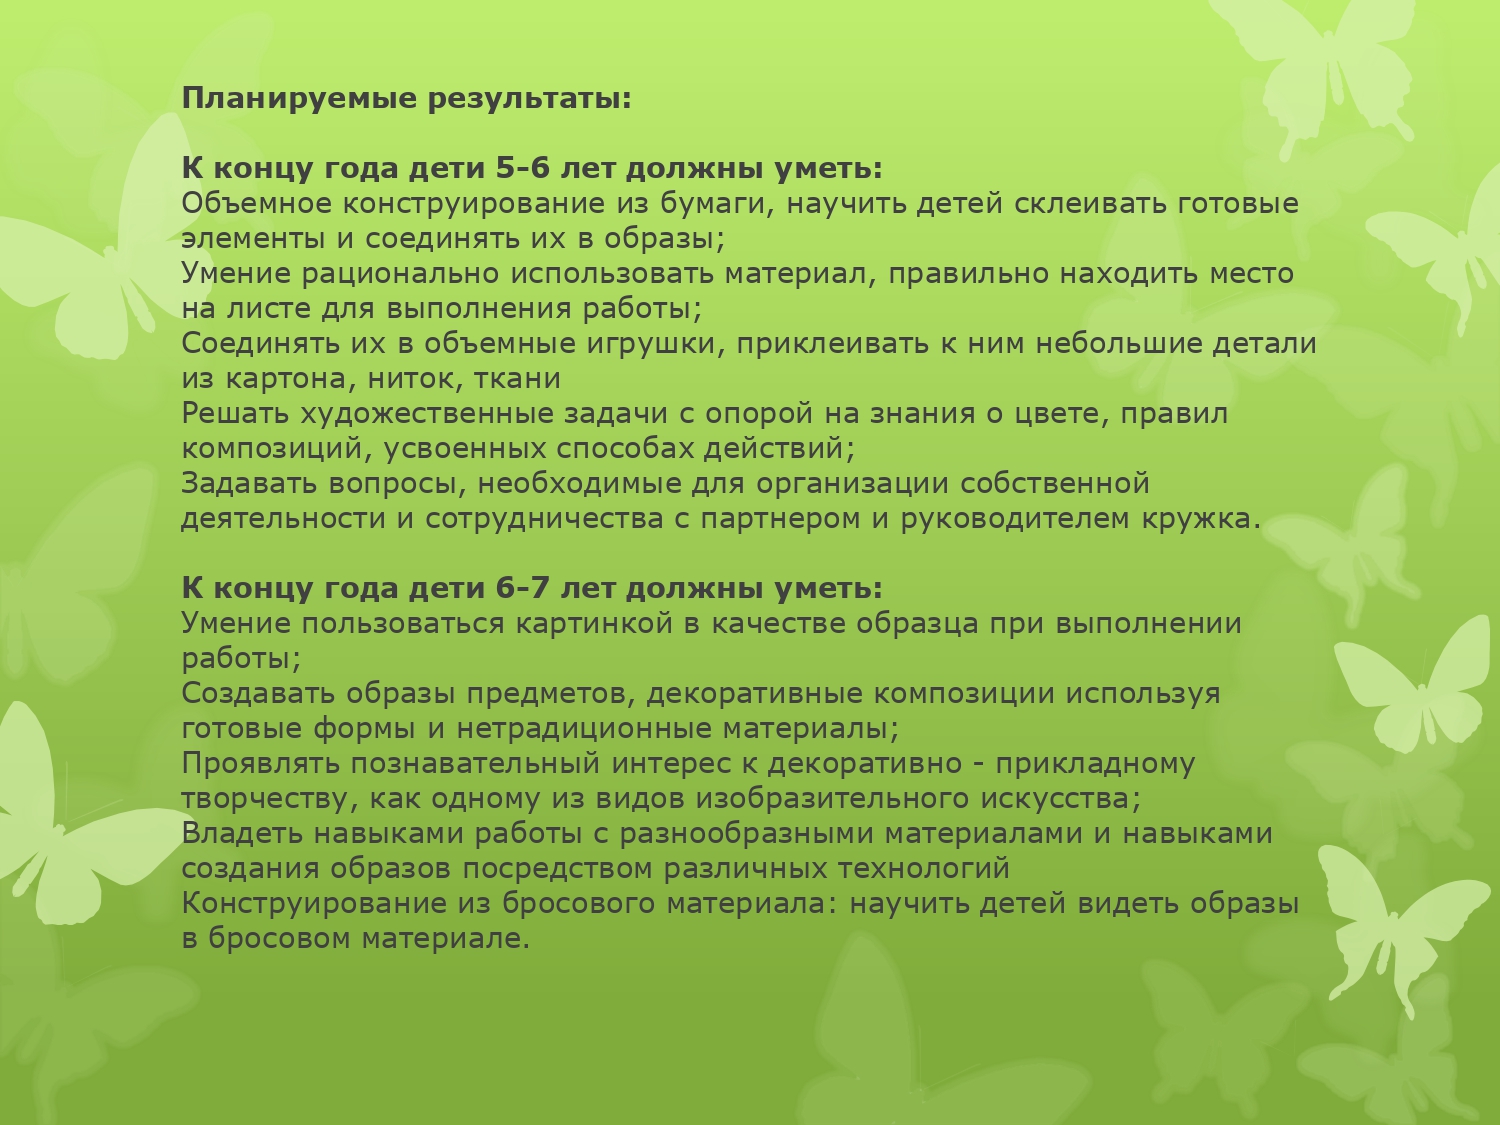 ПрезентацияТворческая мастерская page 0003